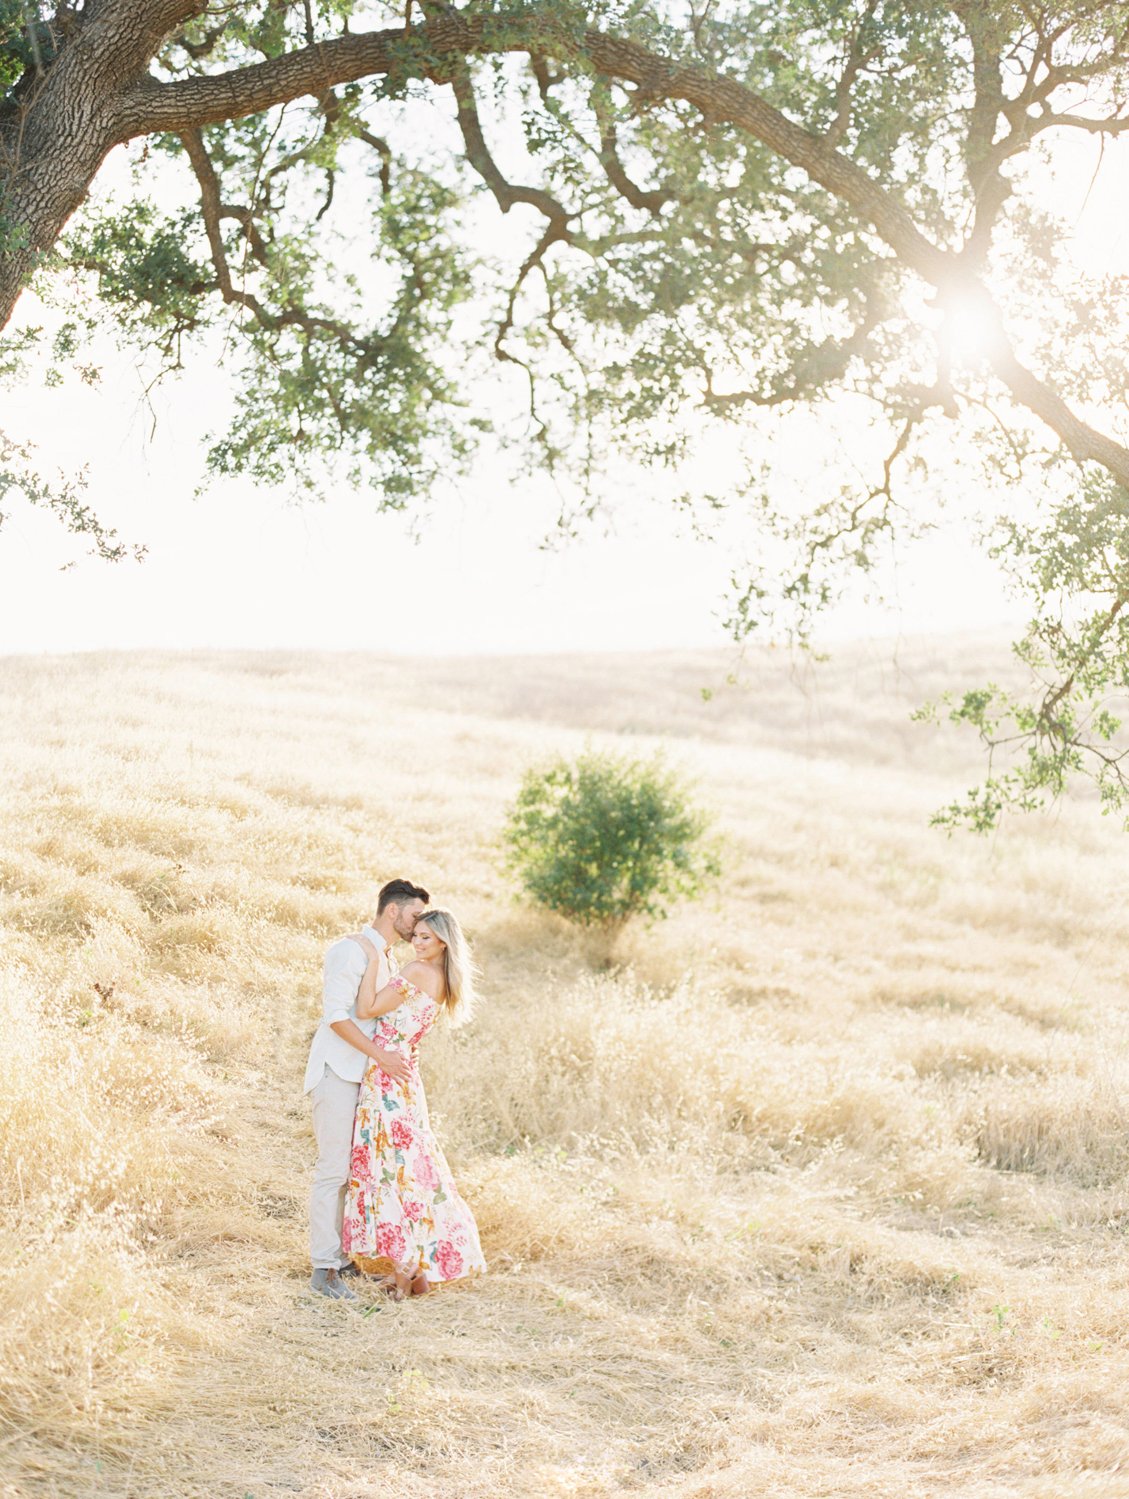 wisteria-photography.com | Wisteria Photography | Malibu Canyon | Weddings Engagement | Southern California Photographer-9.jpg